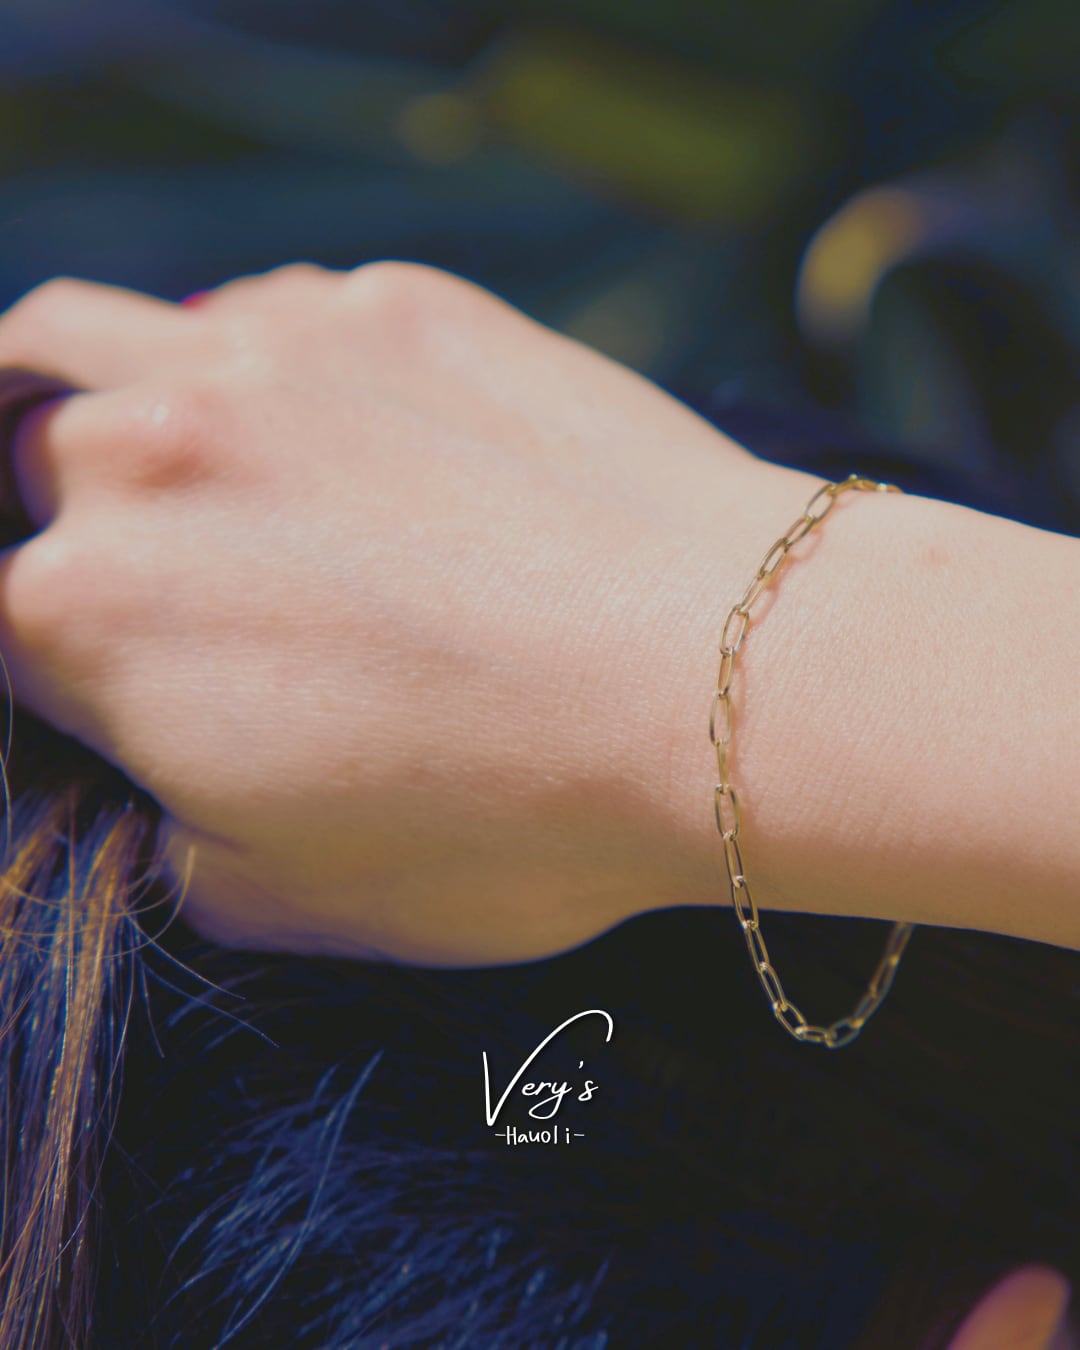 Chain Bracelet【Very's Jewelry】 Very's Hauoli